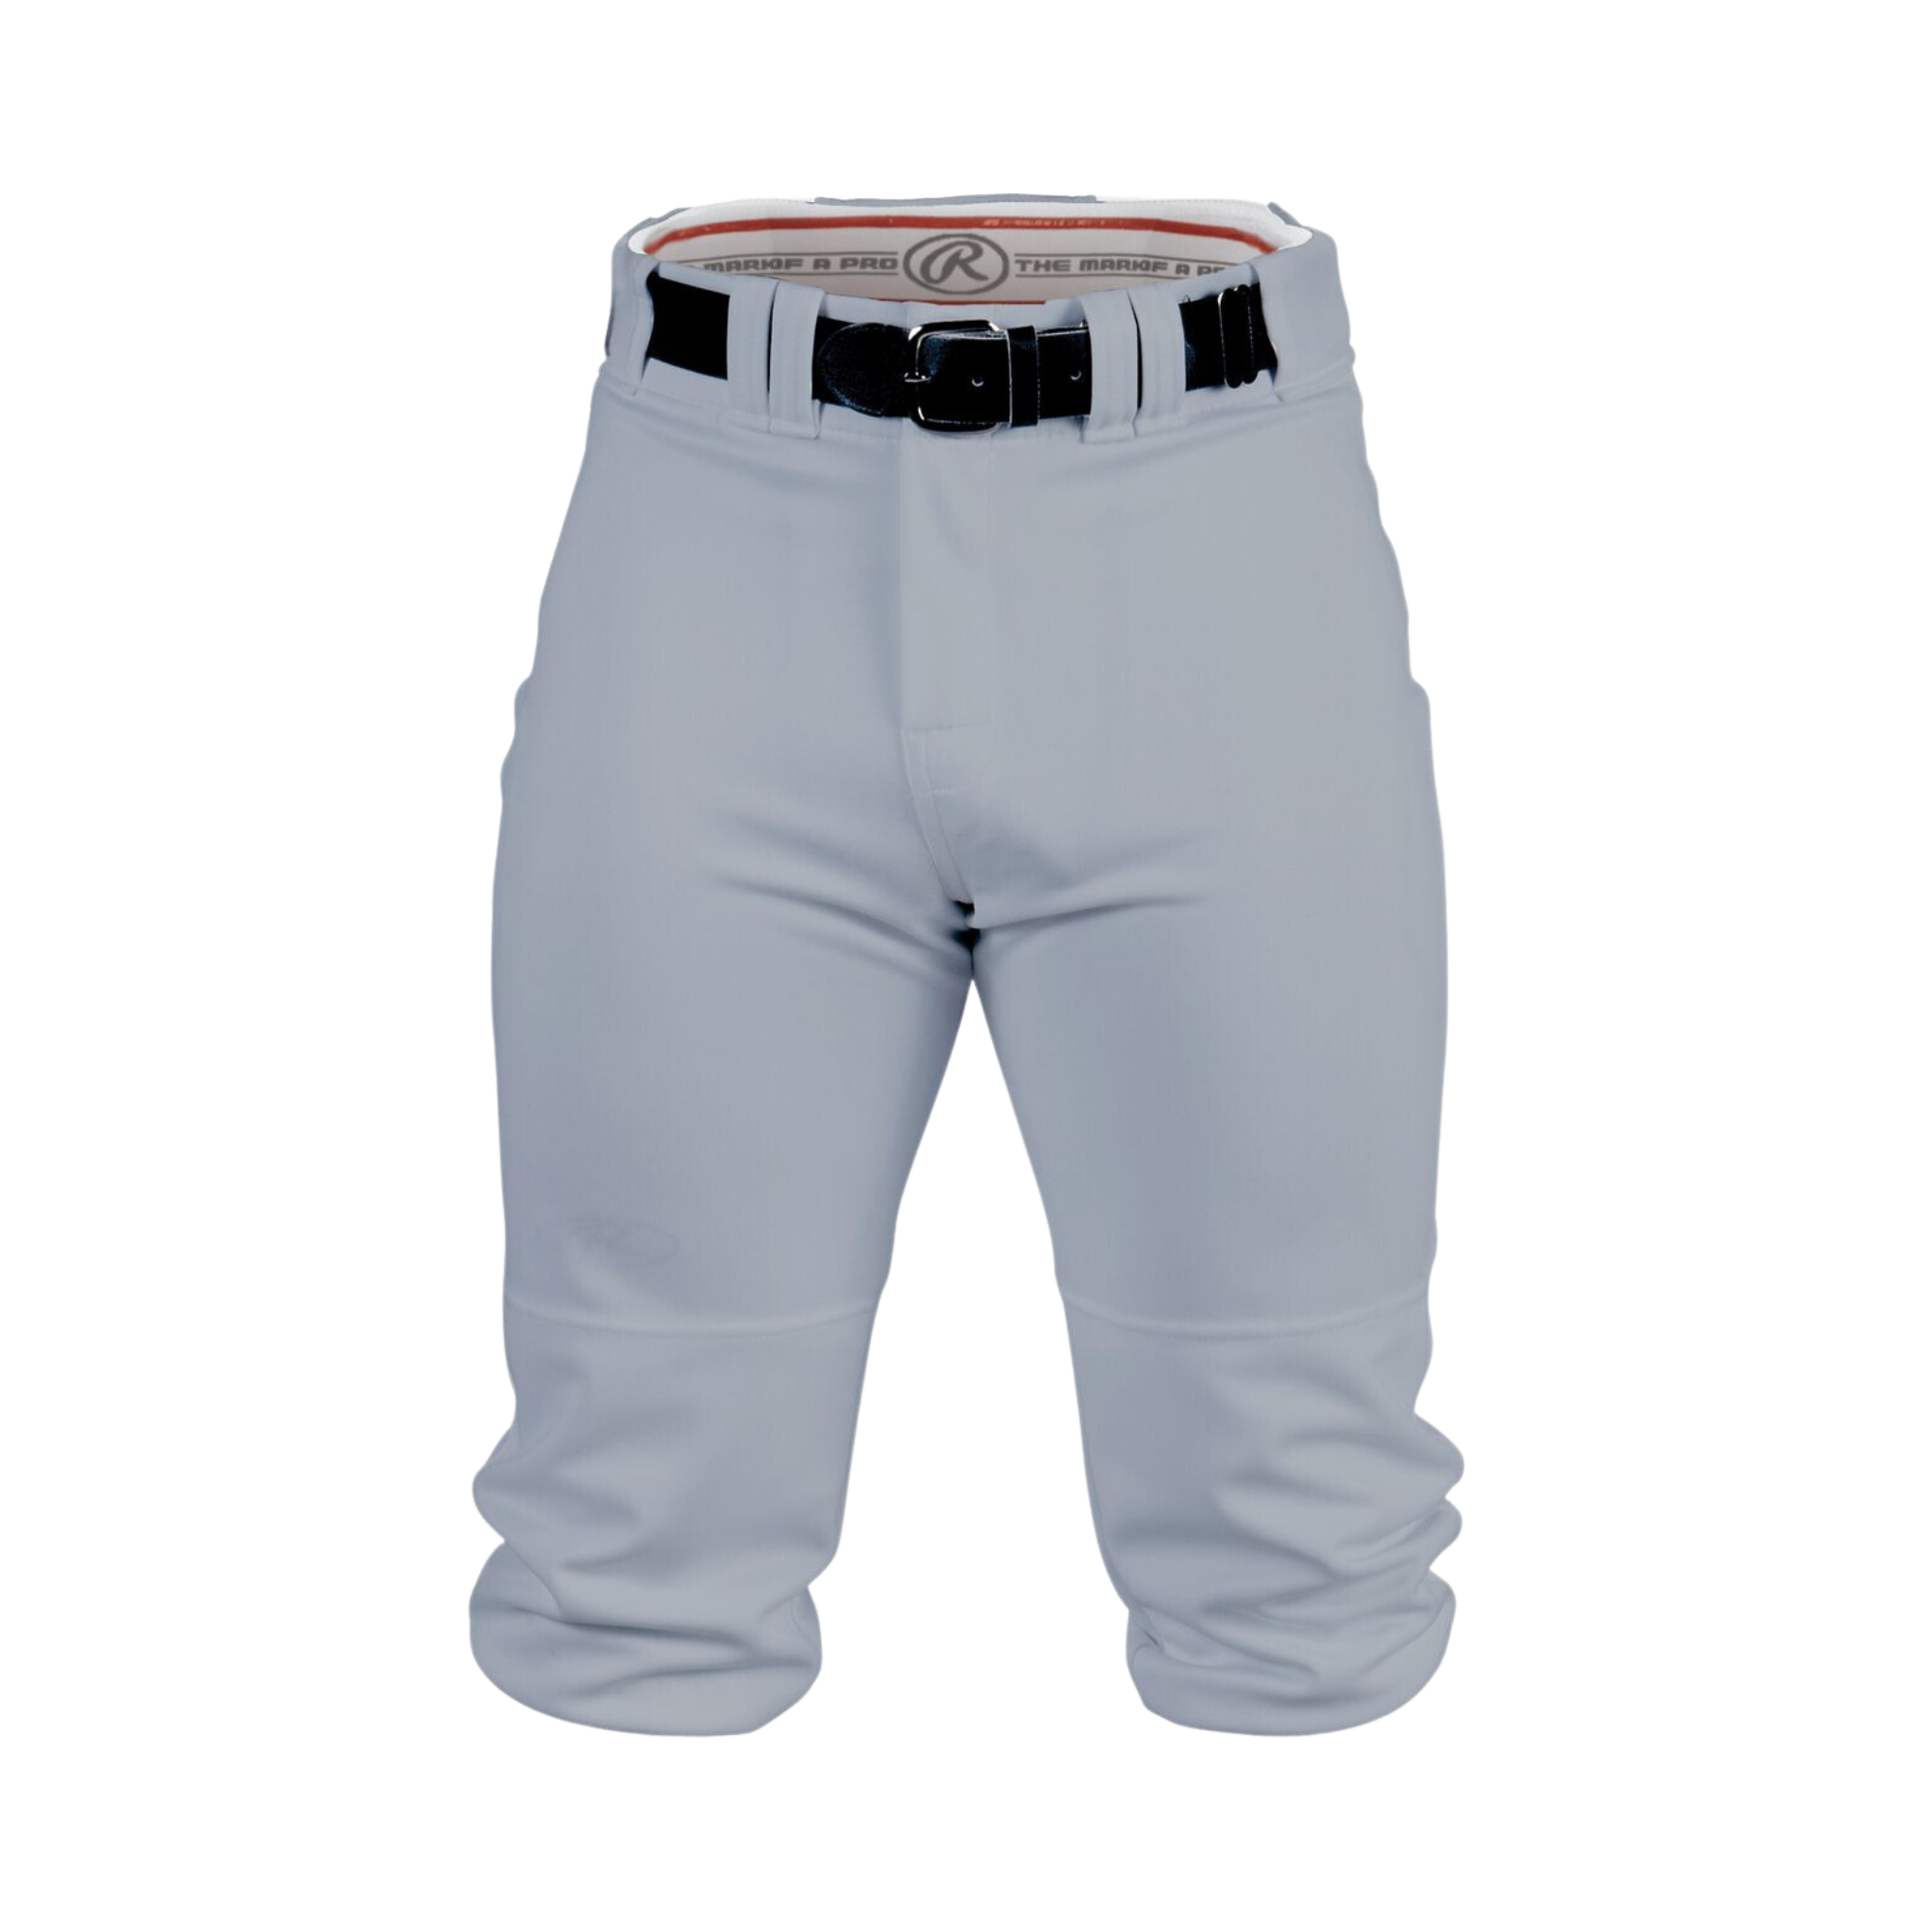 Rawlings Premium Knicker Baseball Pants